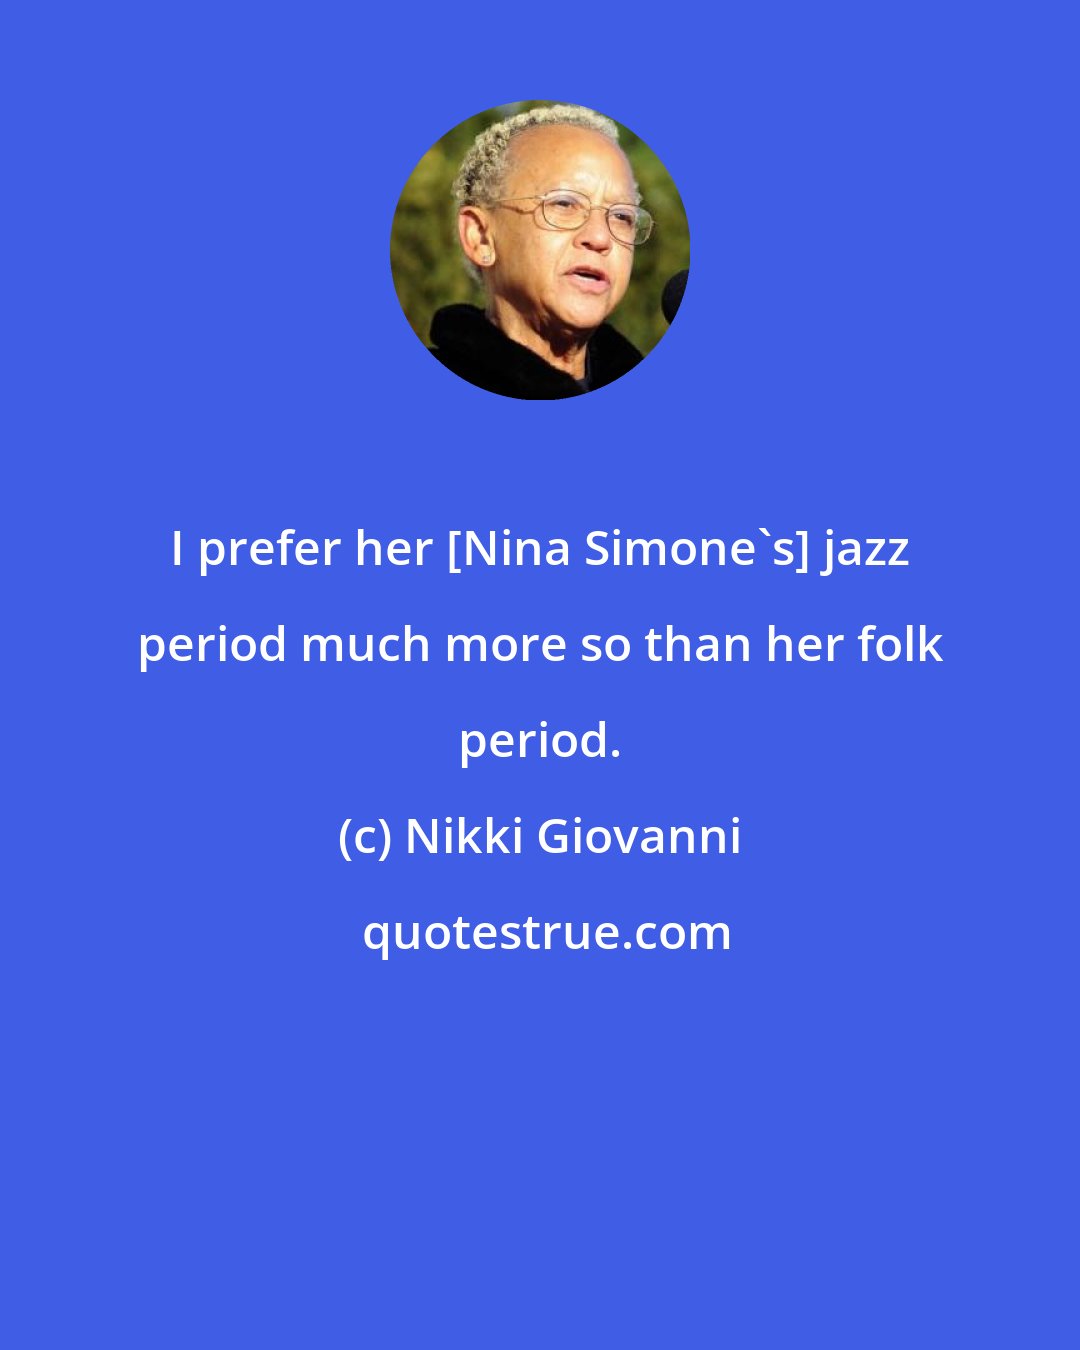 Nikki Giovanni: I prefer her [Nina Simone's] jazz period much more so than her folk period.